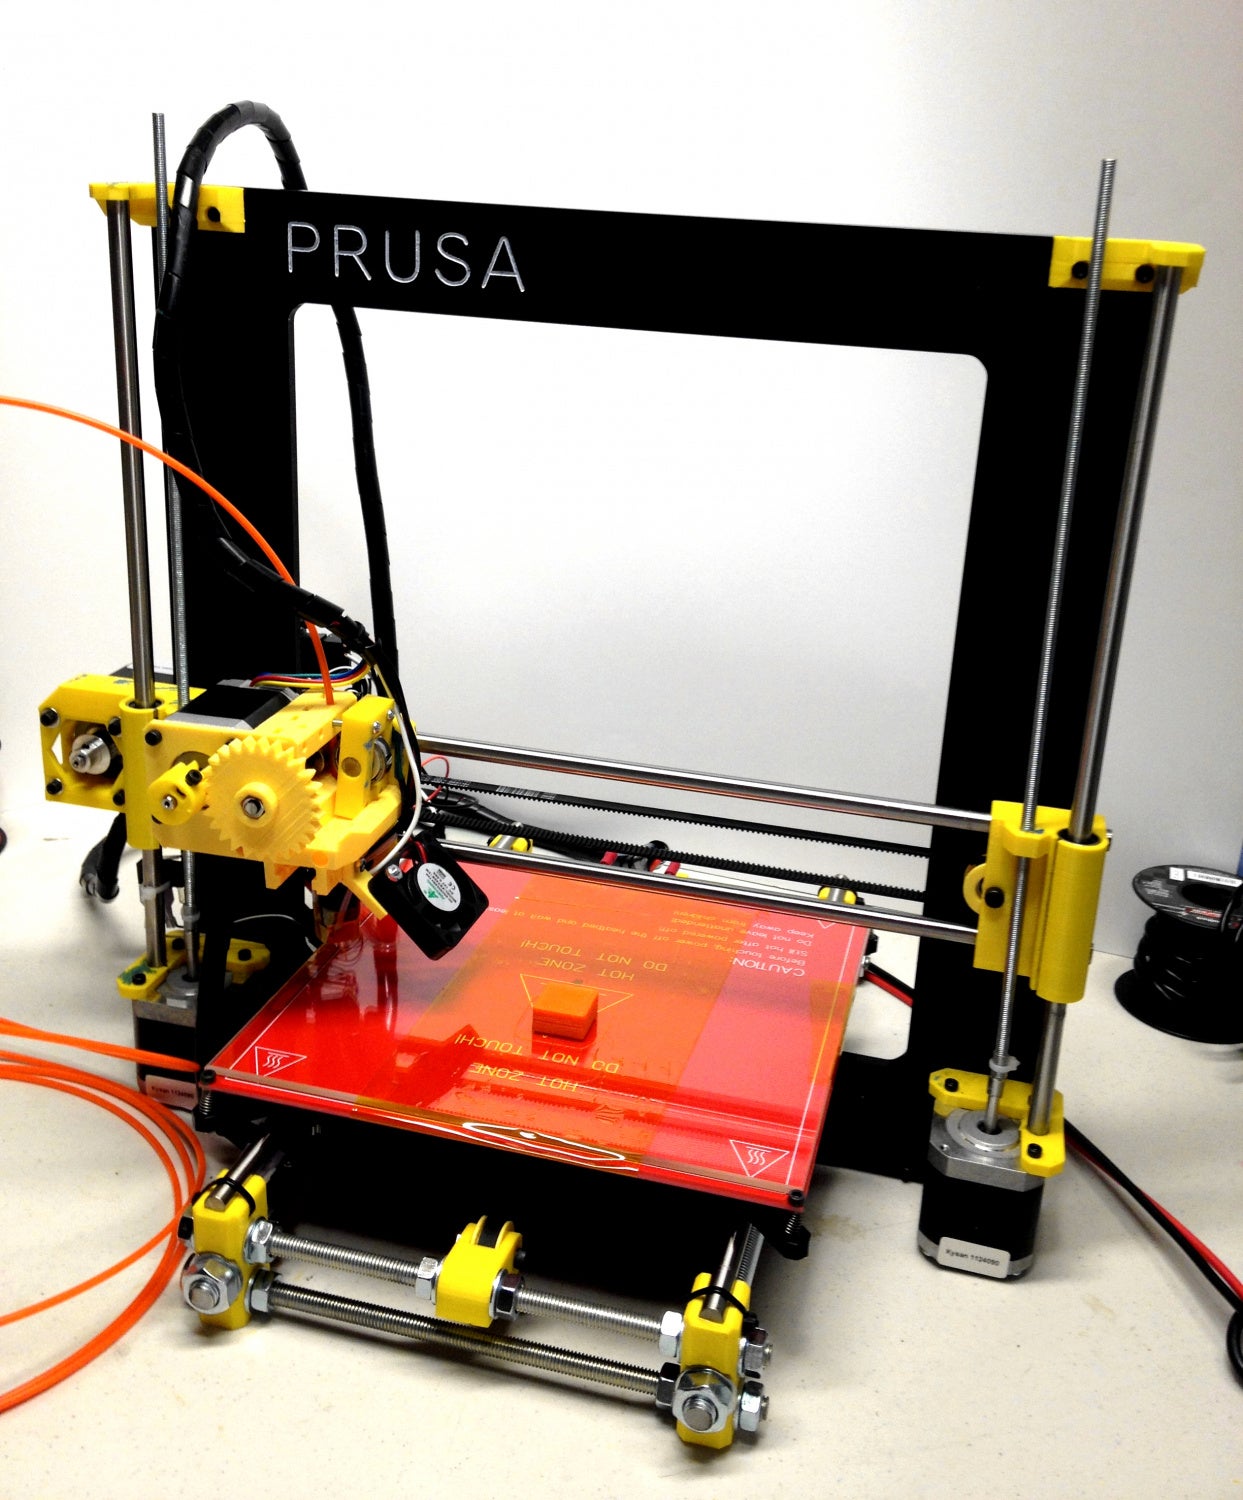 Prusa FFF polymer 3D printer.